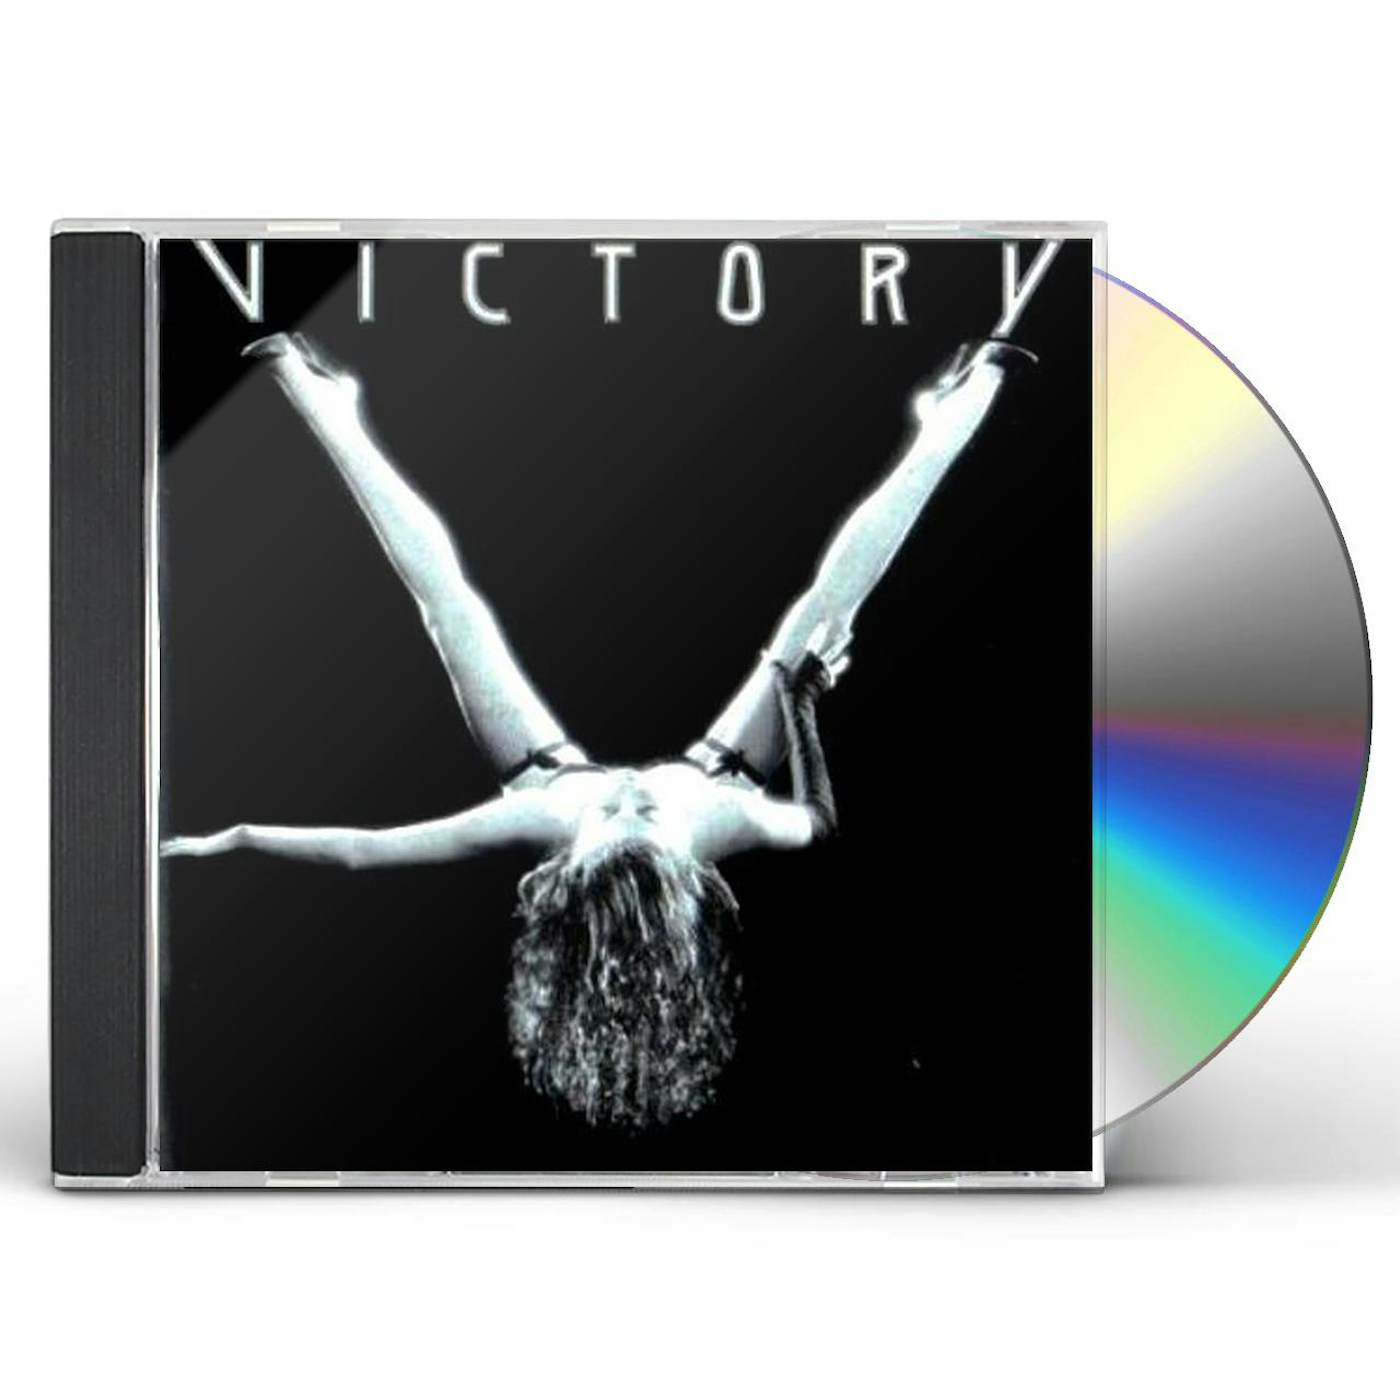 VICTORY CD